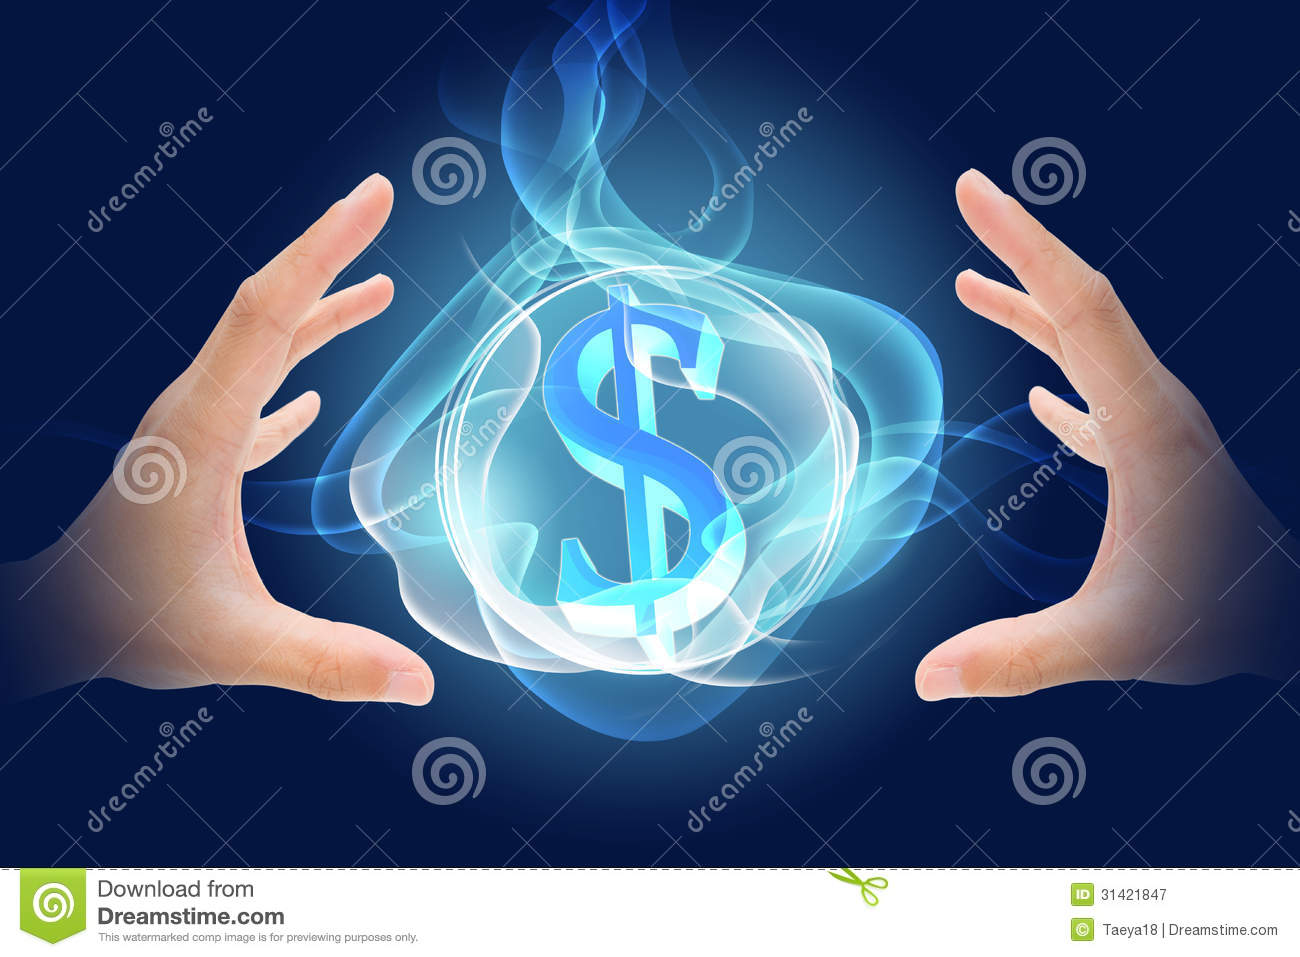 hand-make-money-dollar-symbol-growing-hands-holding-31421847.jpg